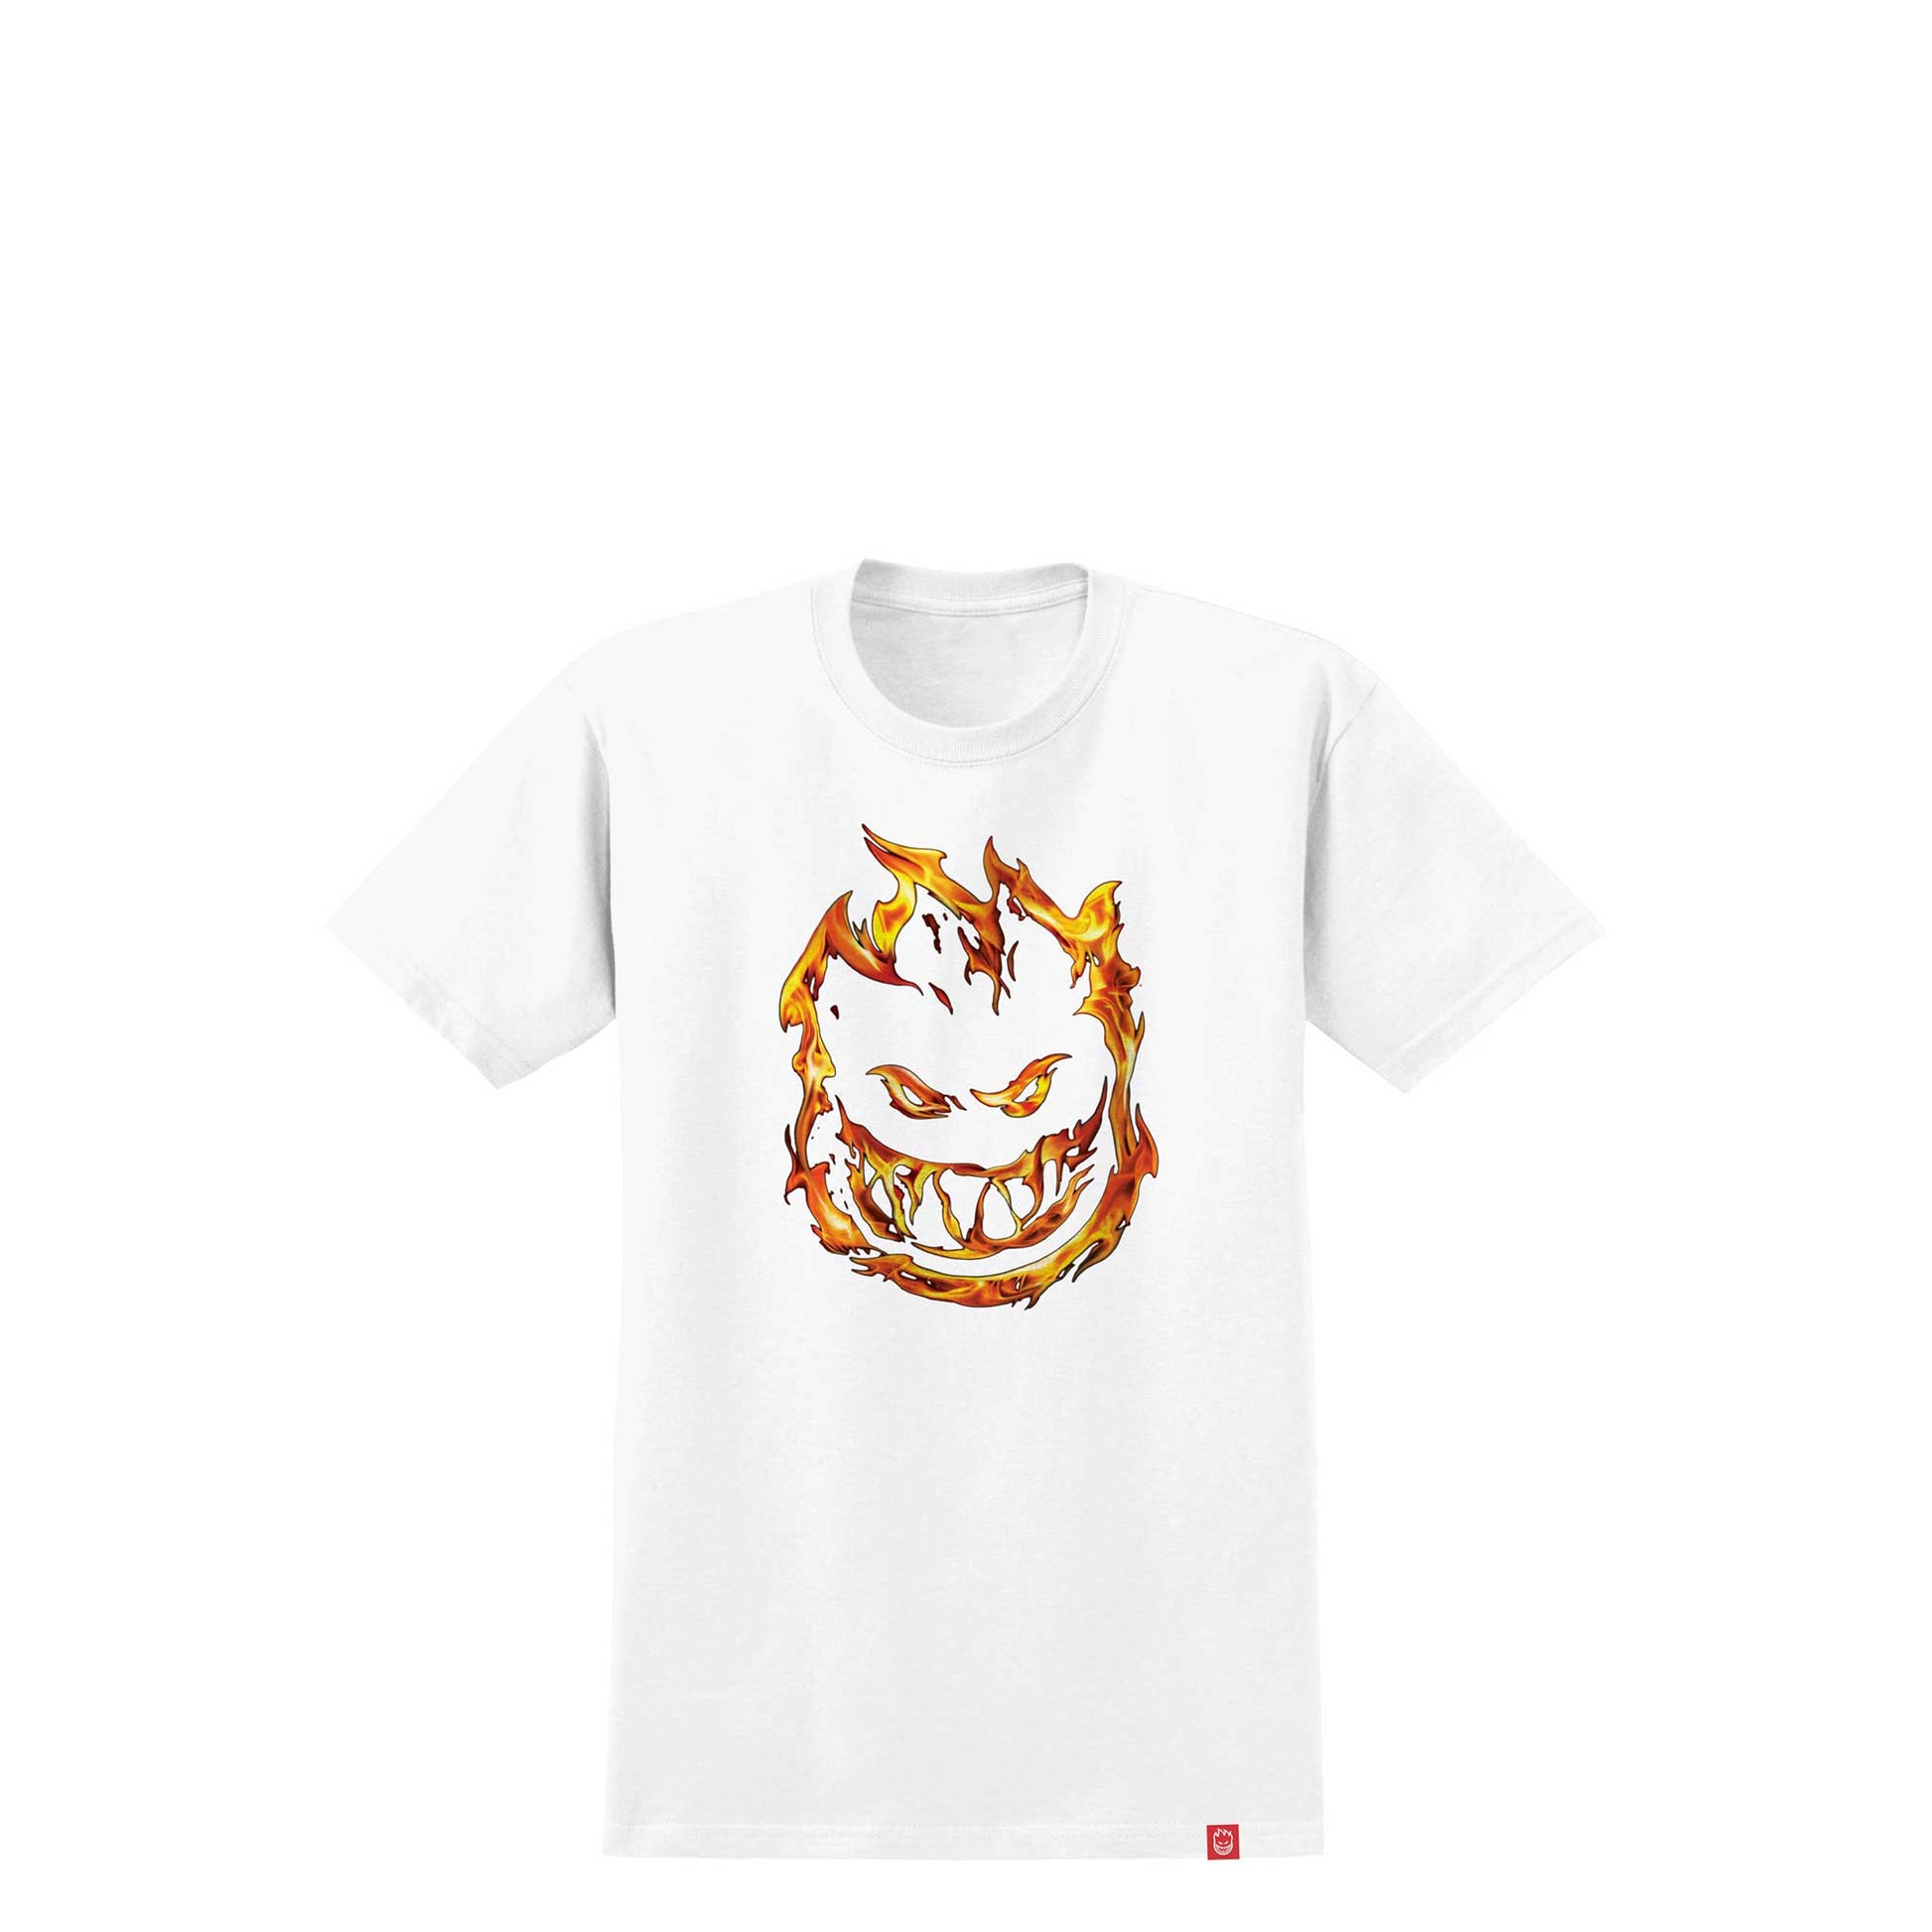 Spitfire 451 T-shirt- Premium Print, white w/ multi color print - Tiki Room Skateboards - 1